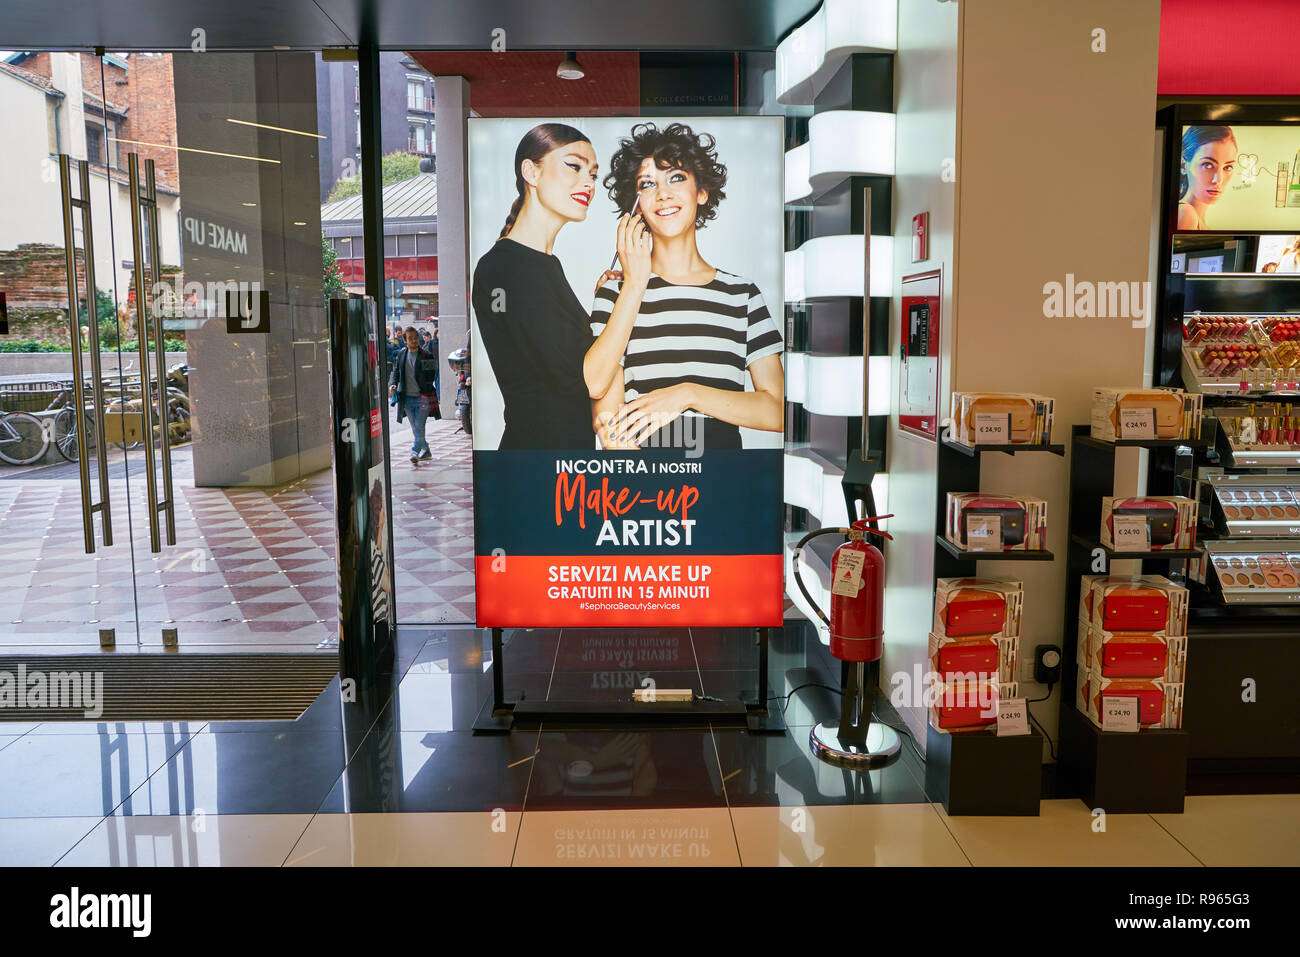 Rome May 12 Sephora Cosmetics Store Stock Photo 59899285